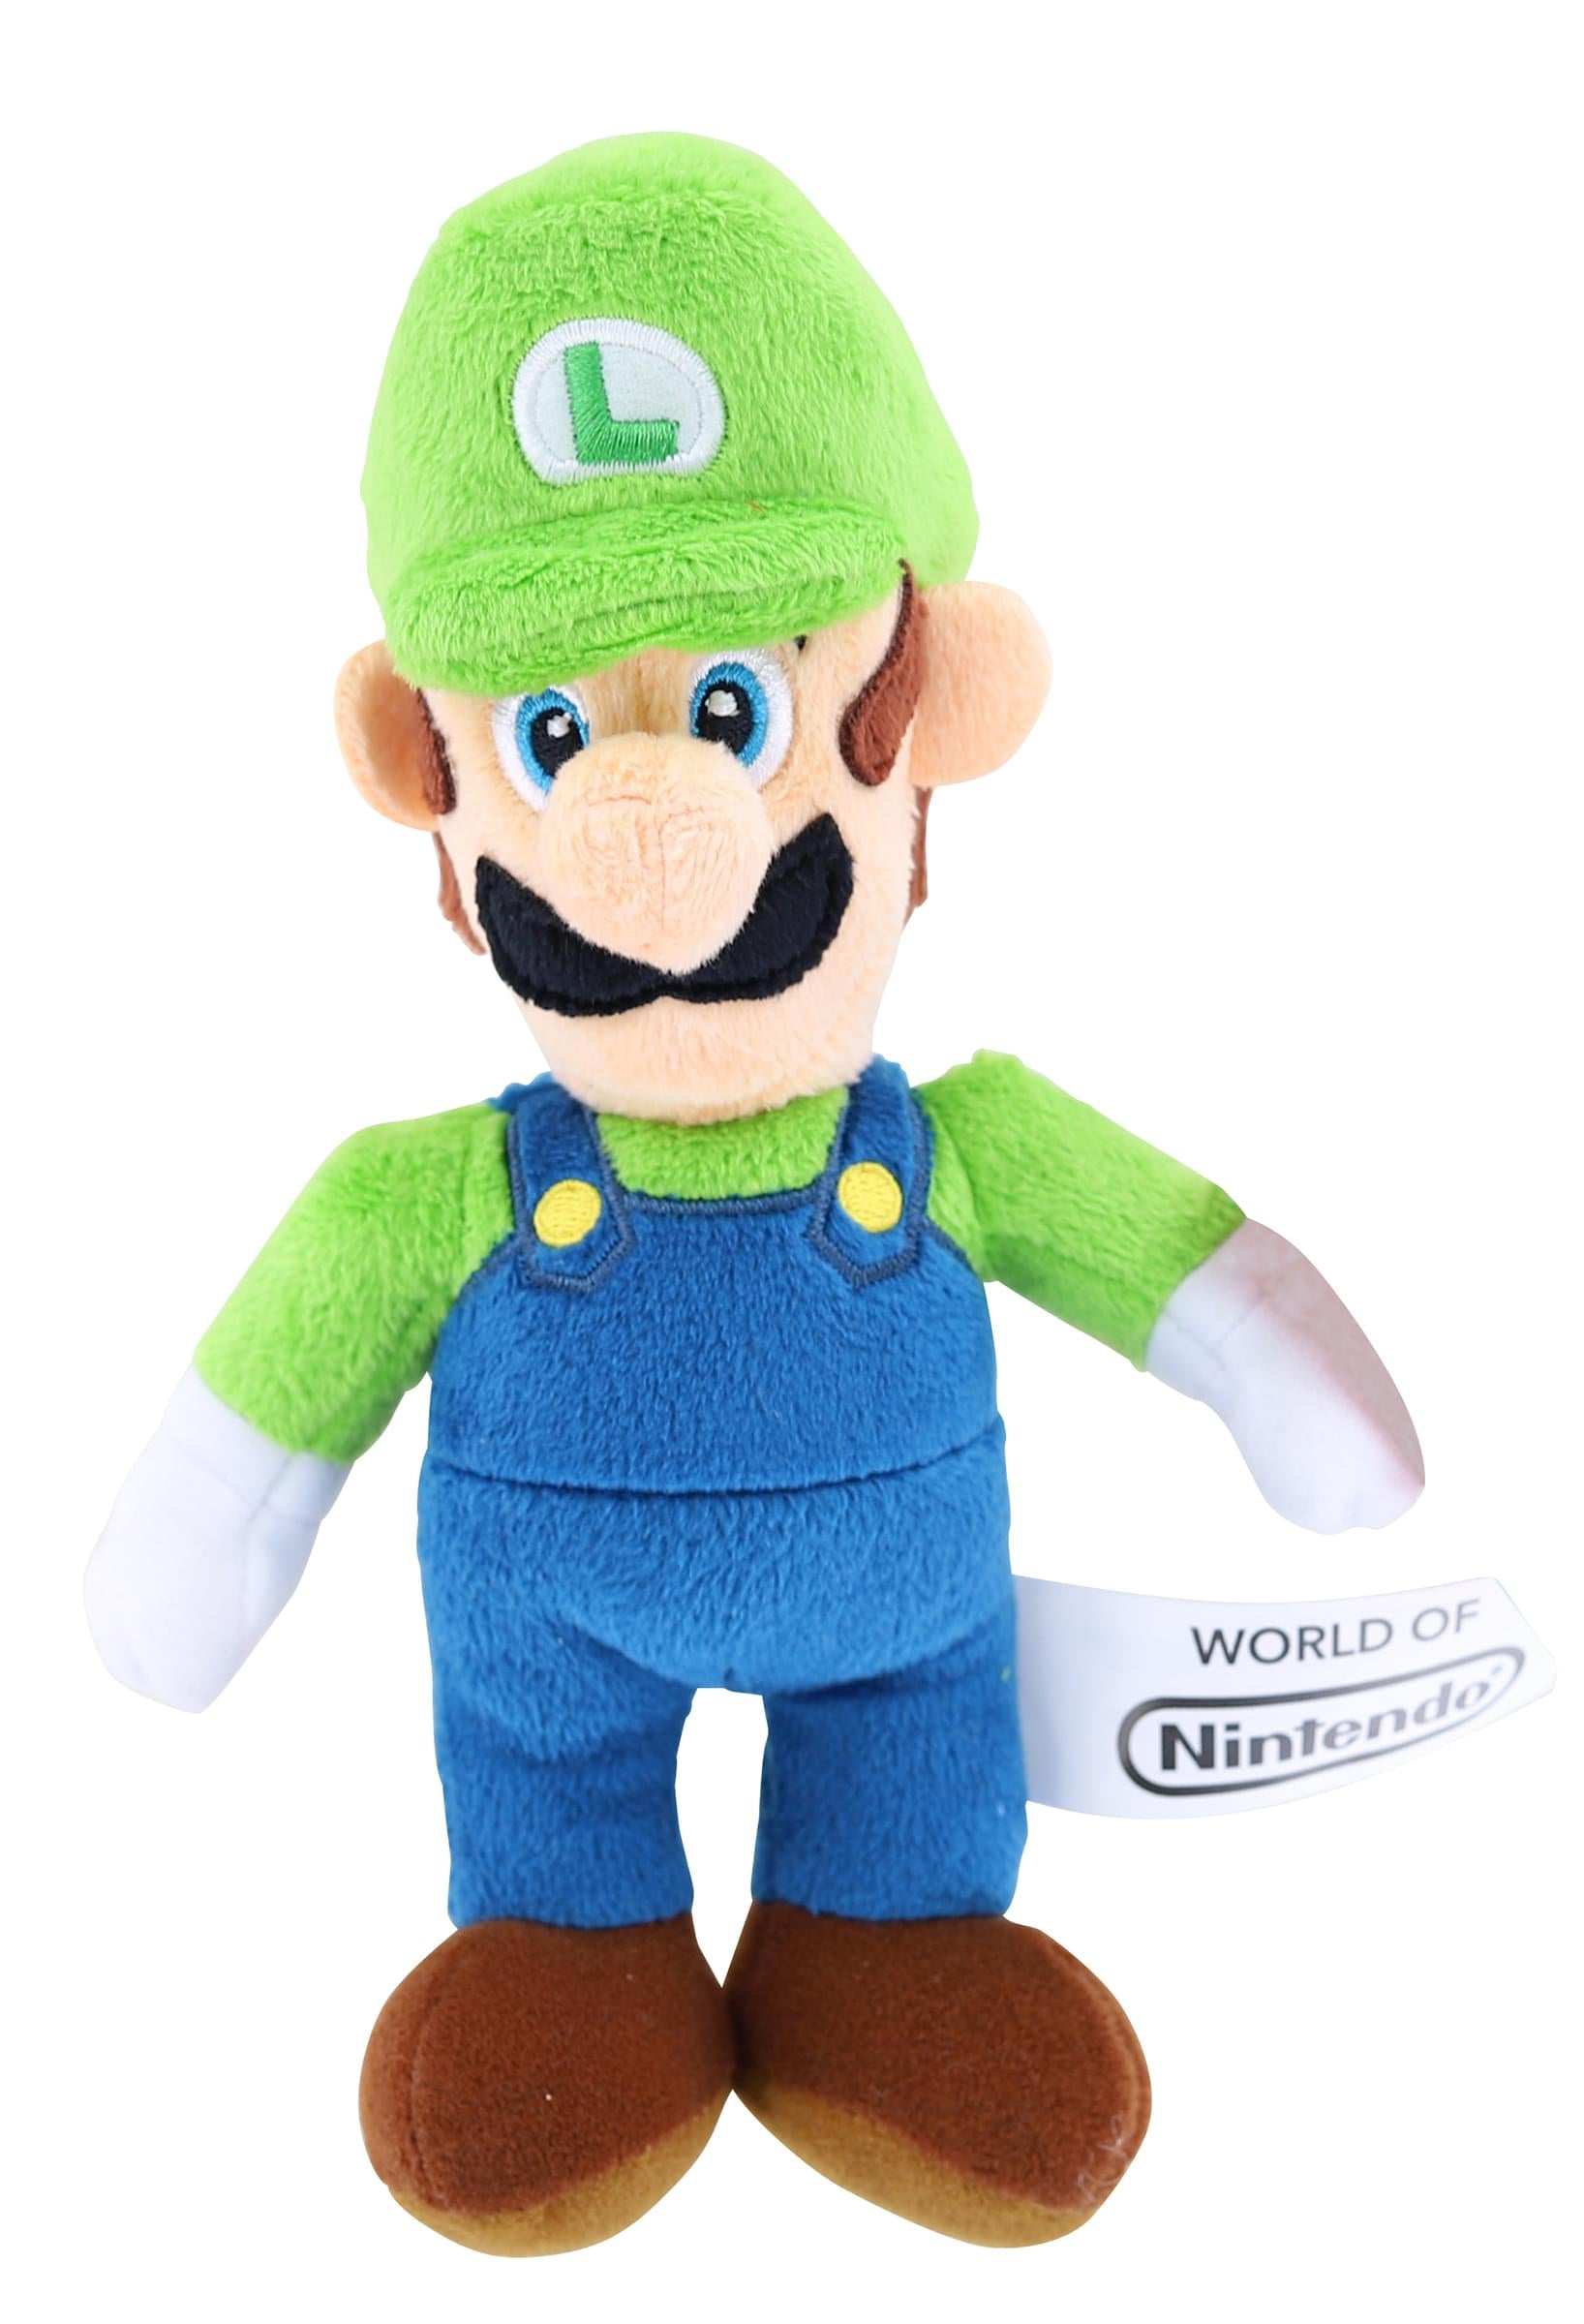 Super Mario World of Nintendo 7 Inch Plush | Luigi